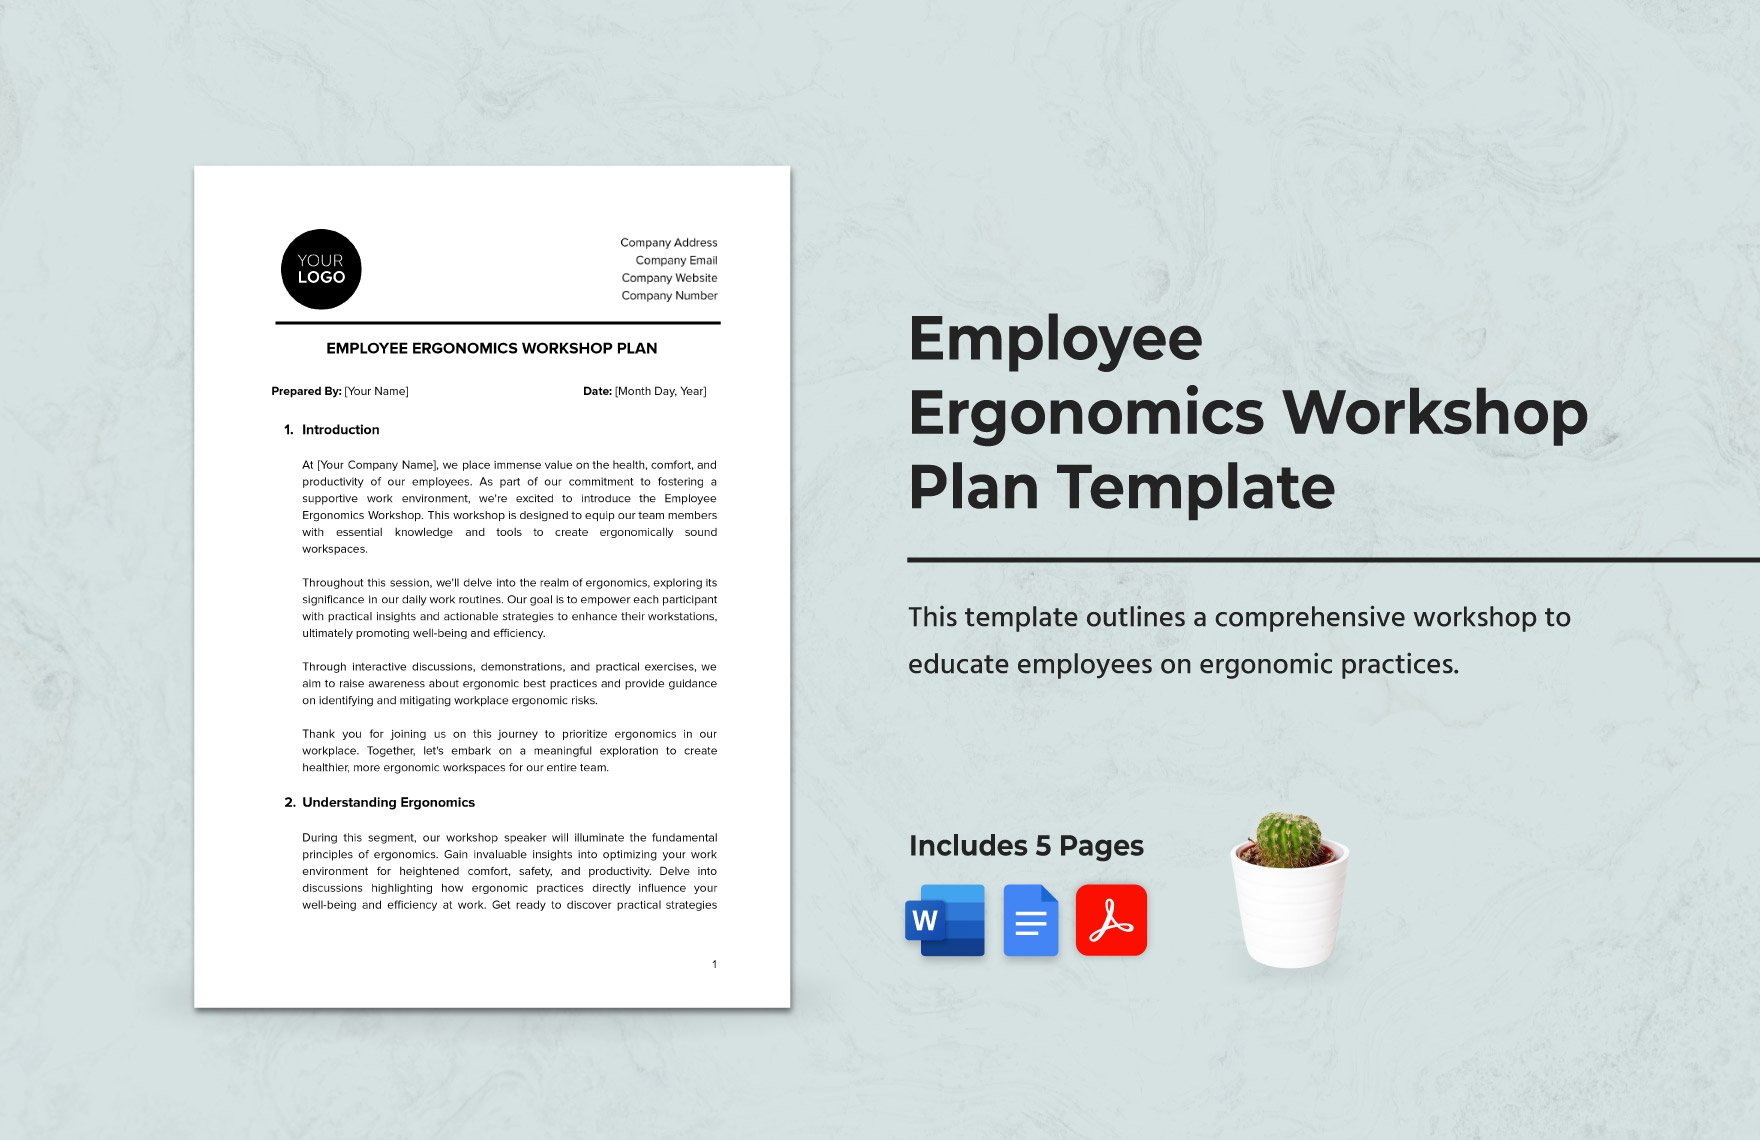 Employee Ergonomics Workshop Plan Template